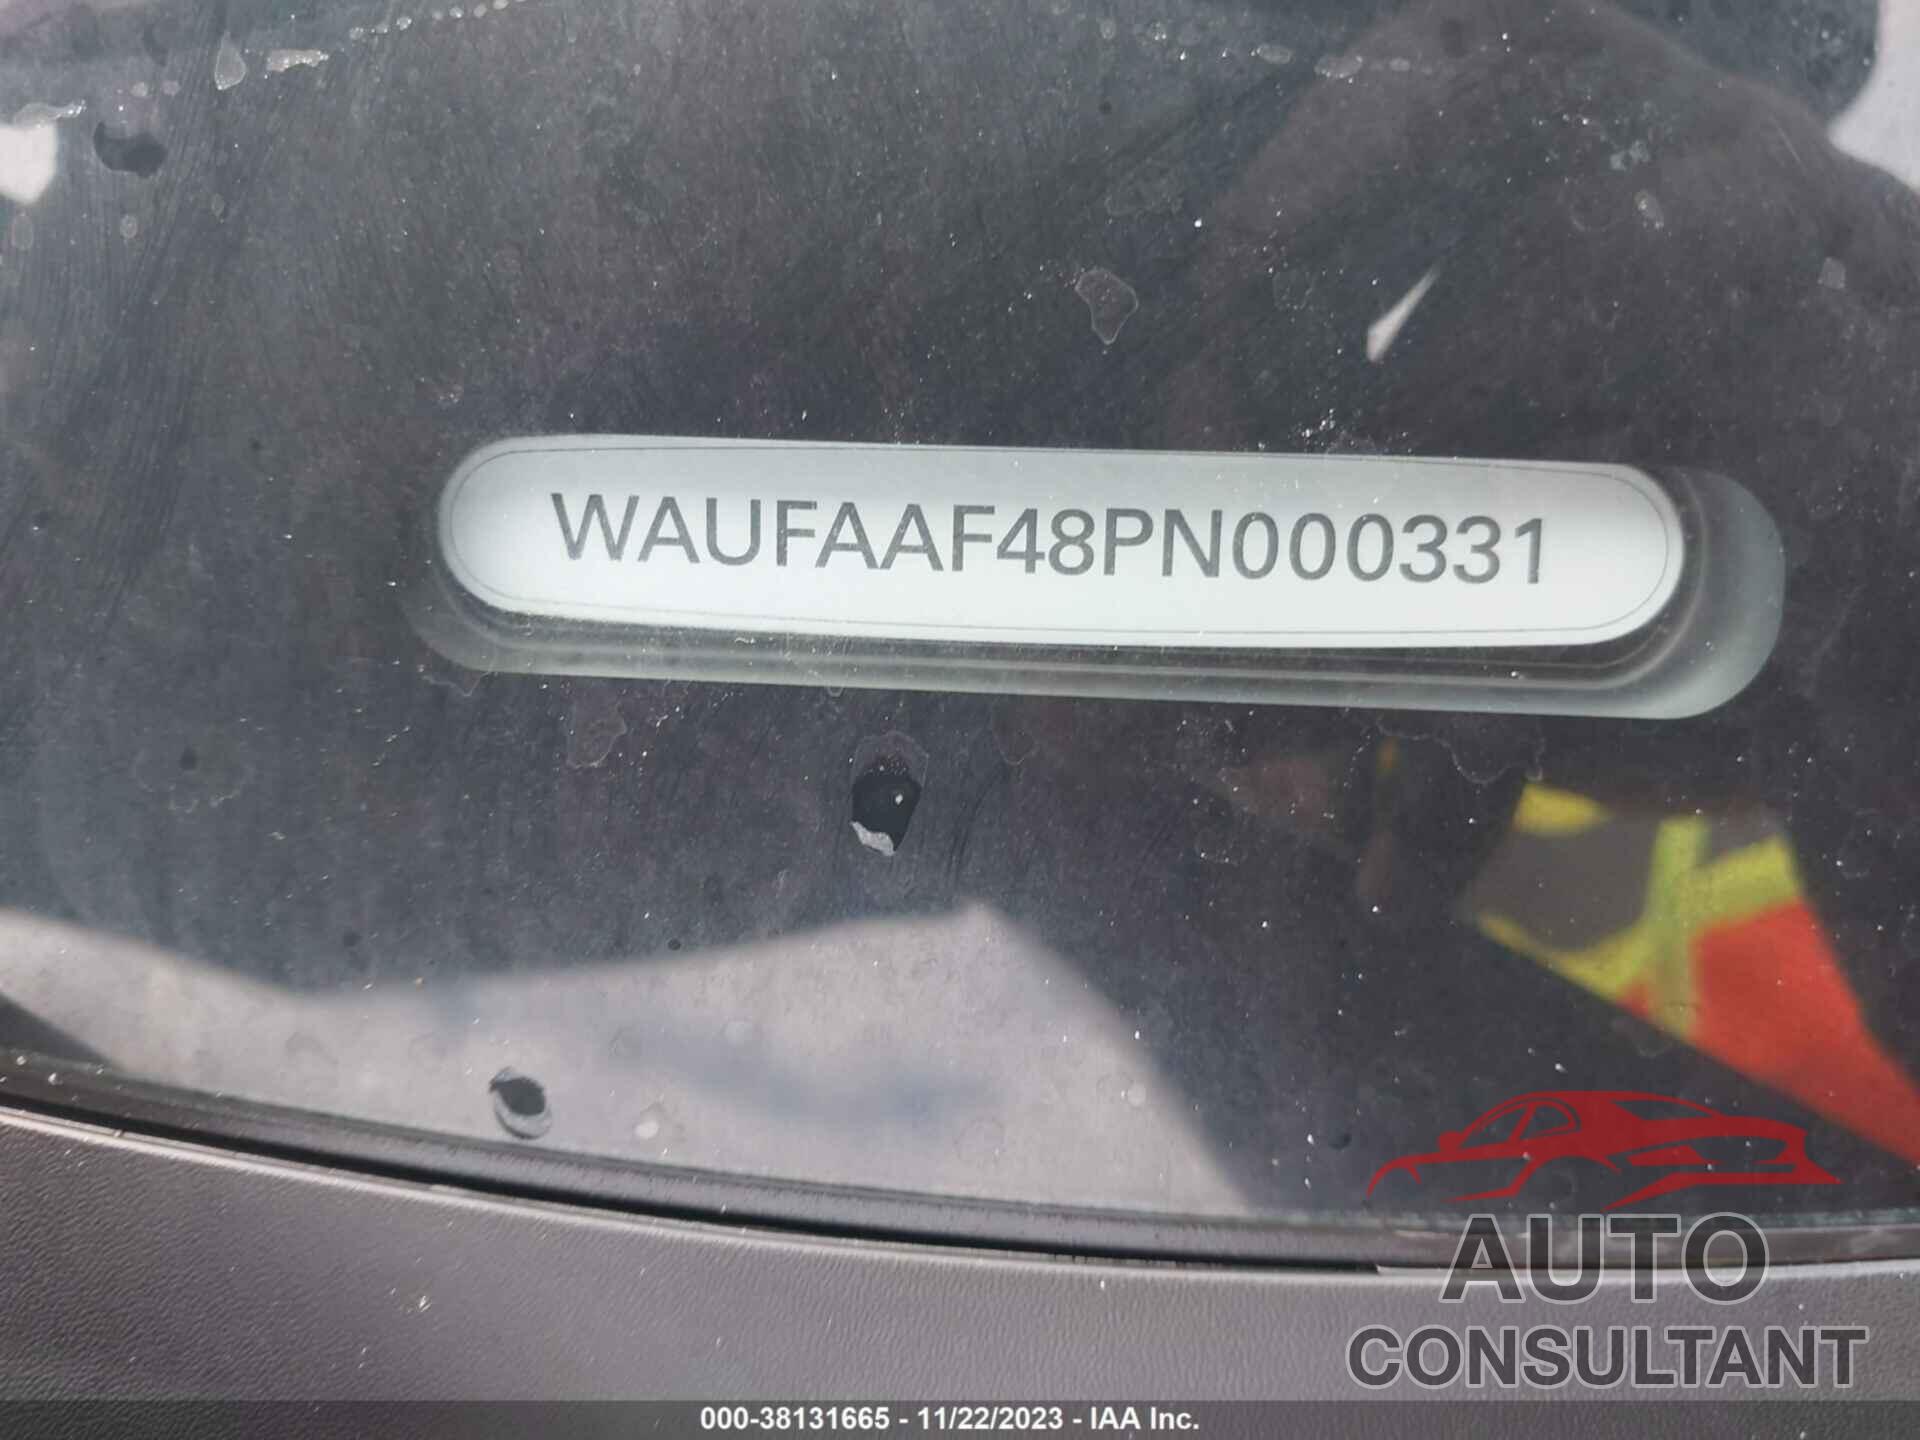 AUDI A4 2023 - WAUFAAF48PN000331